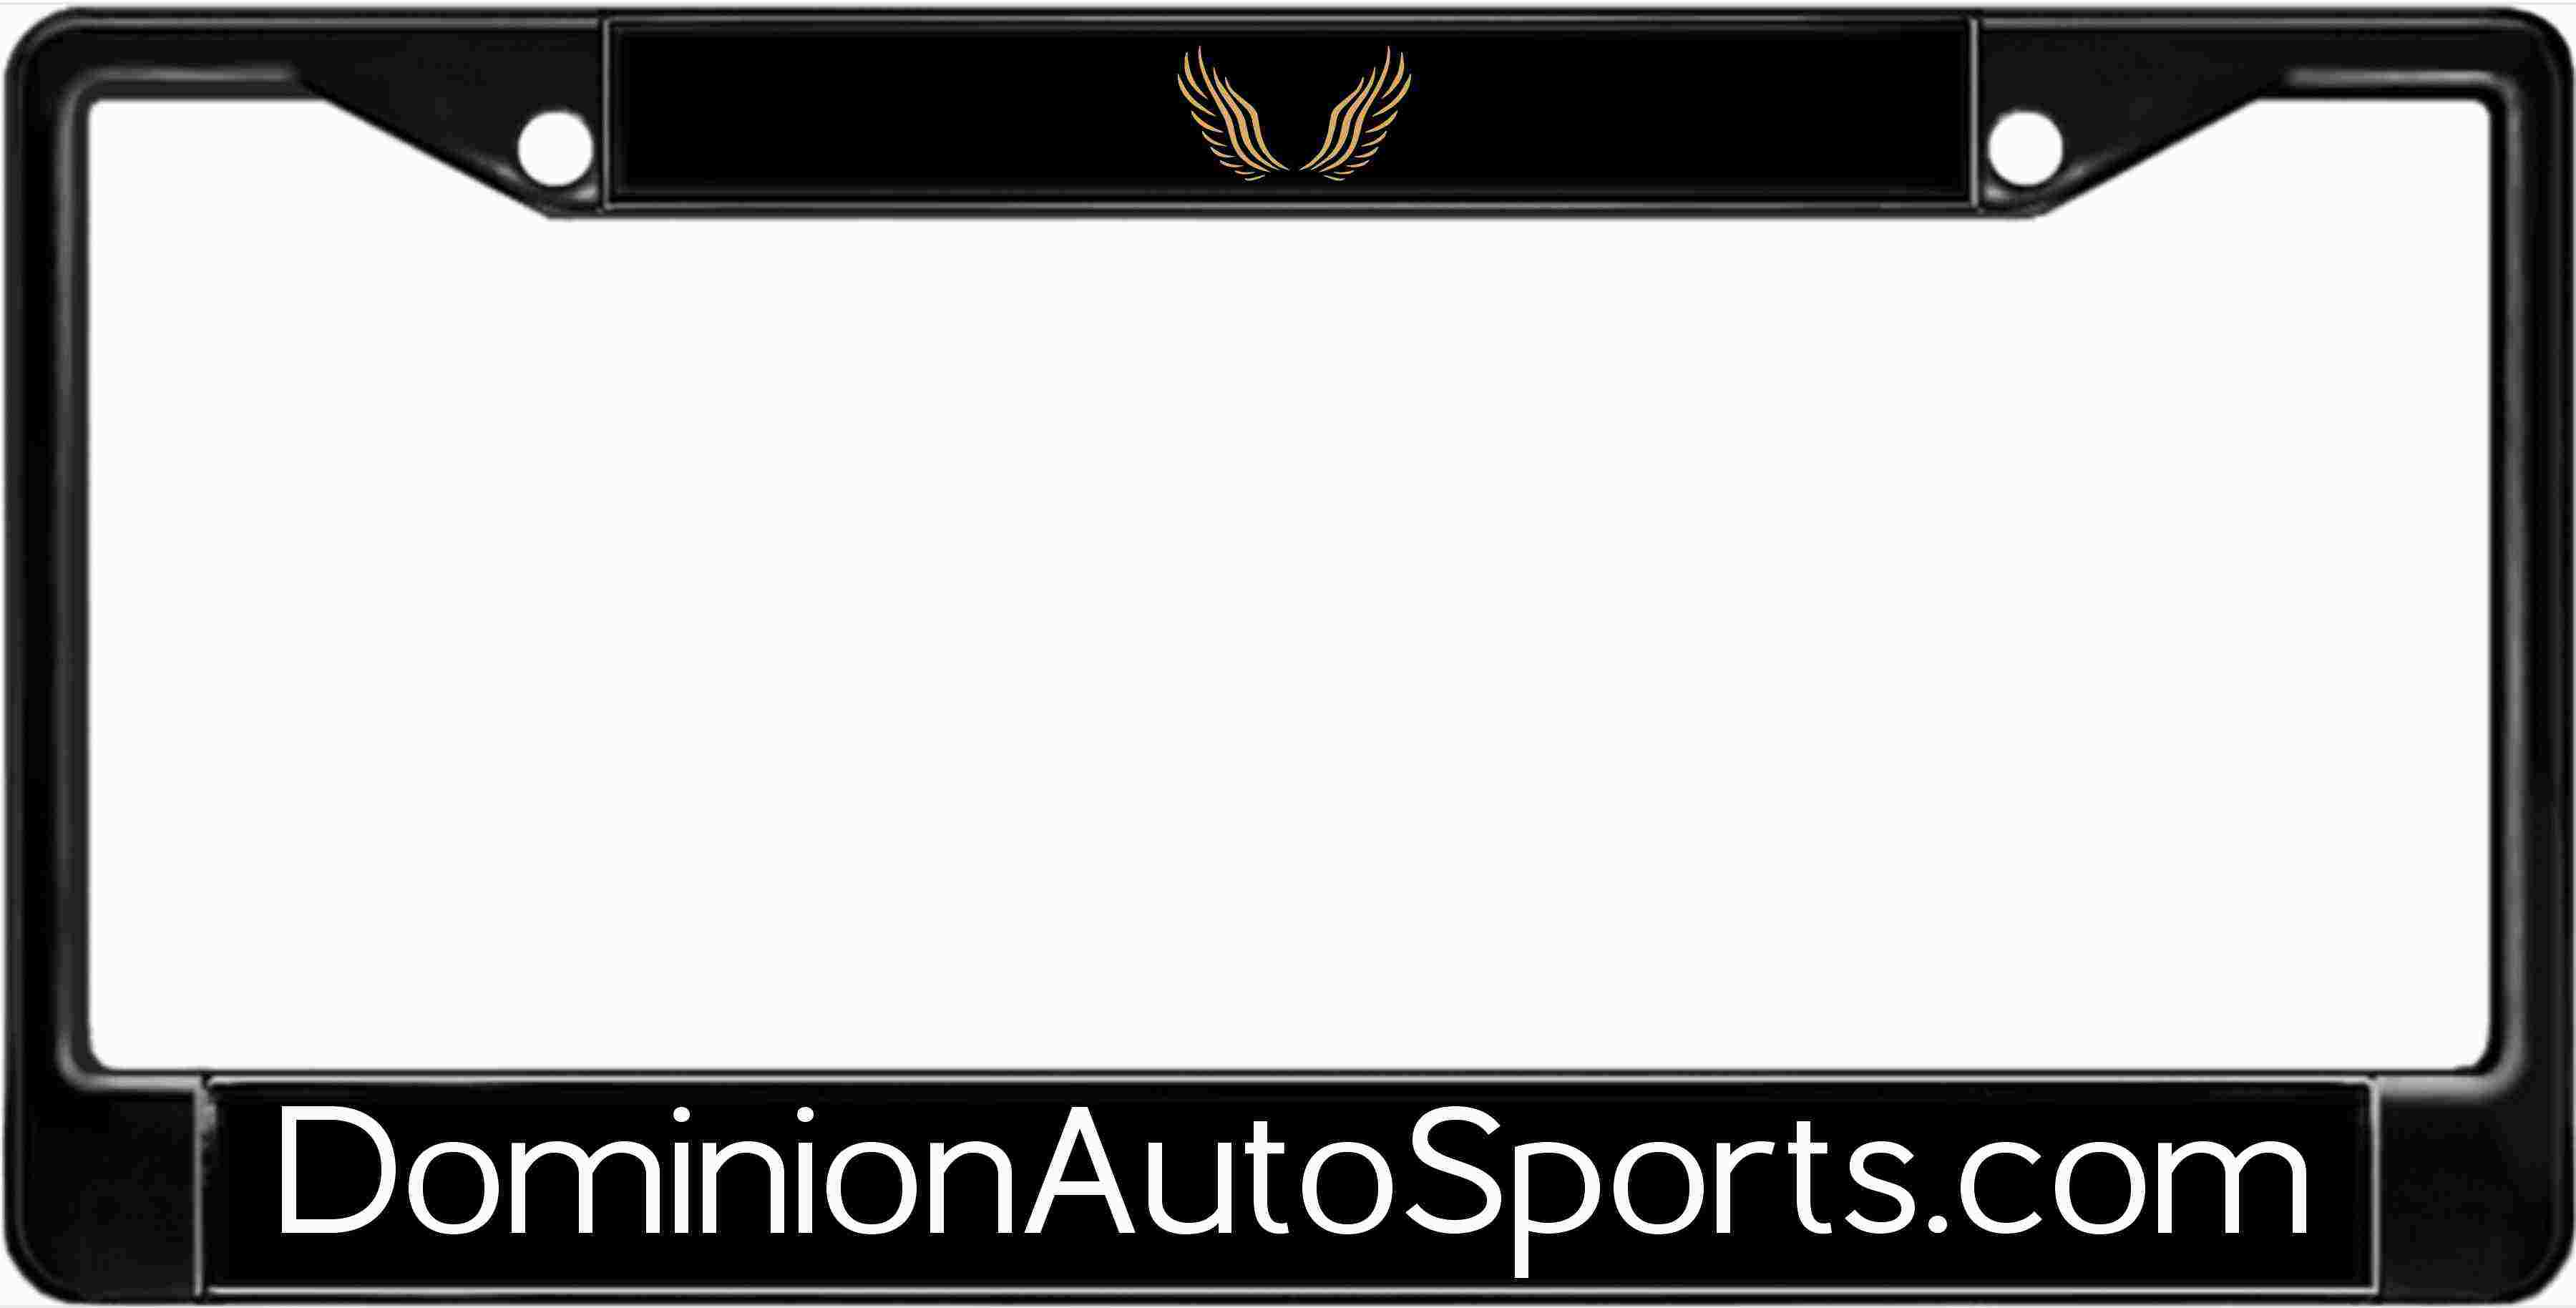 Dominion Autosports - Custom metal license plate frame